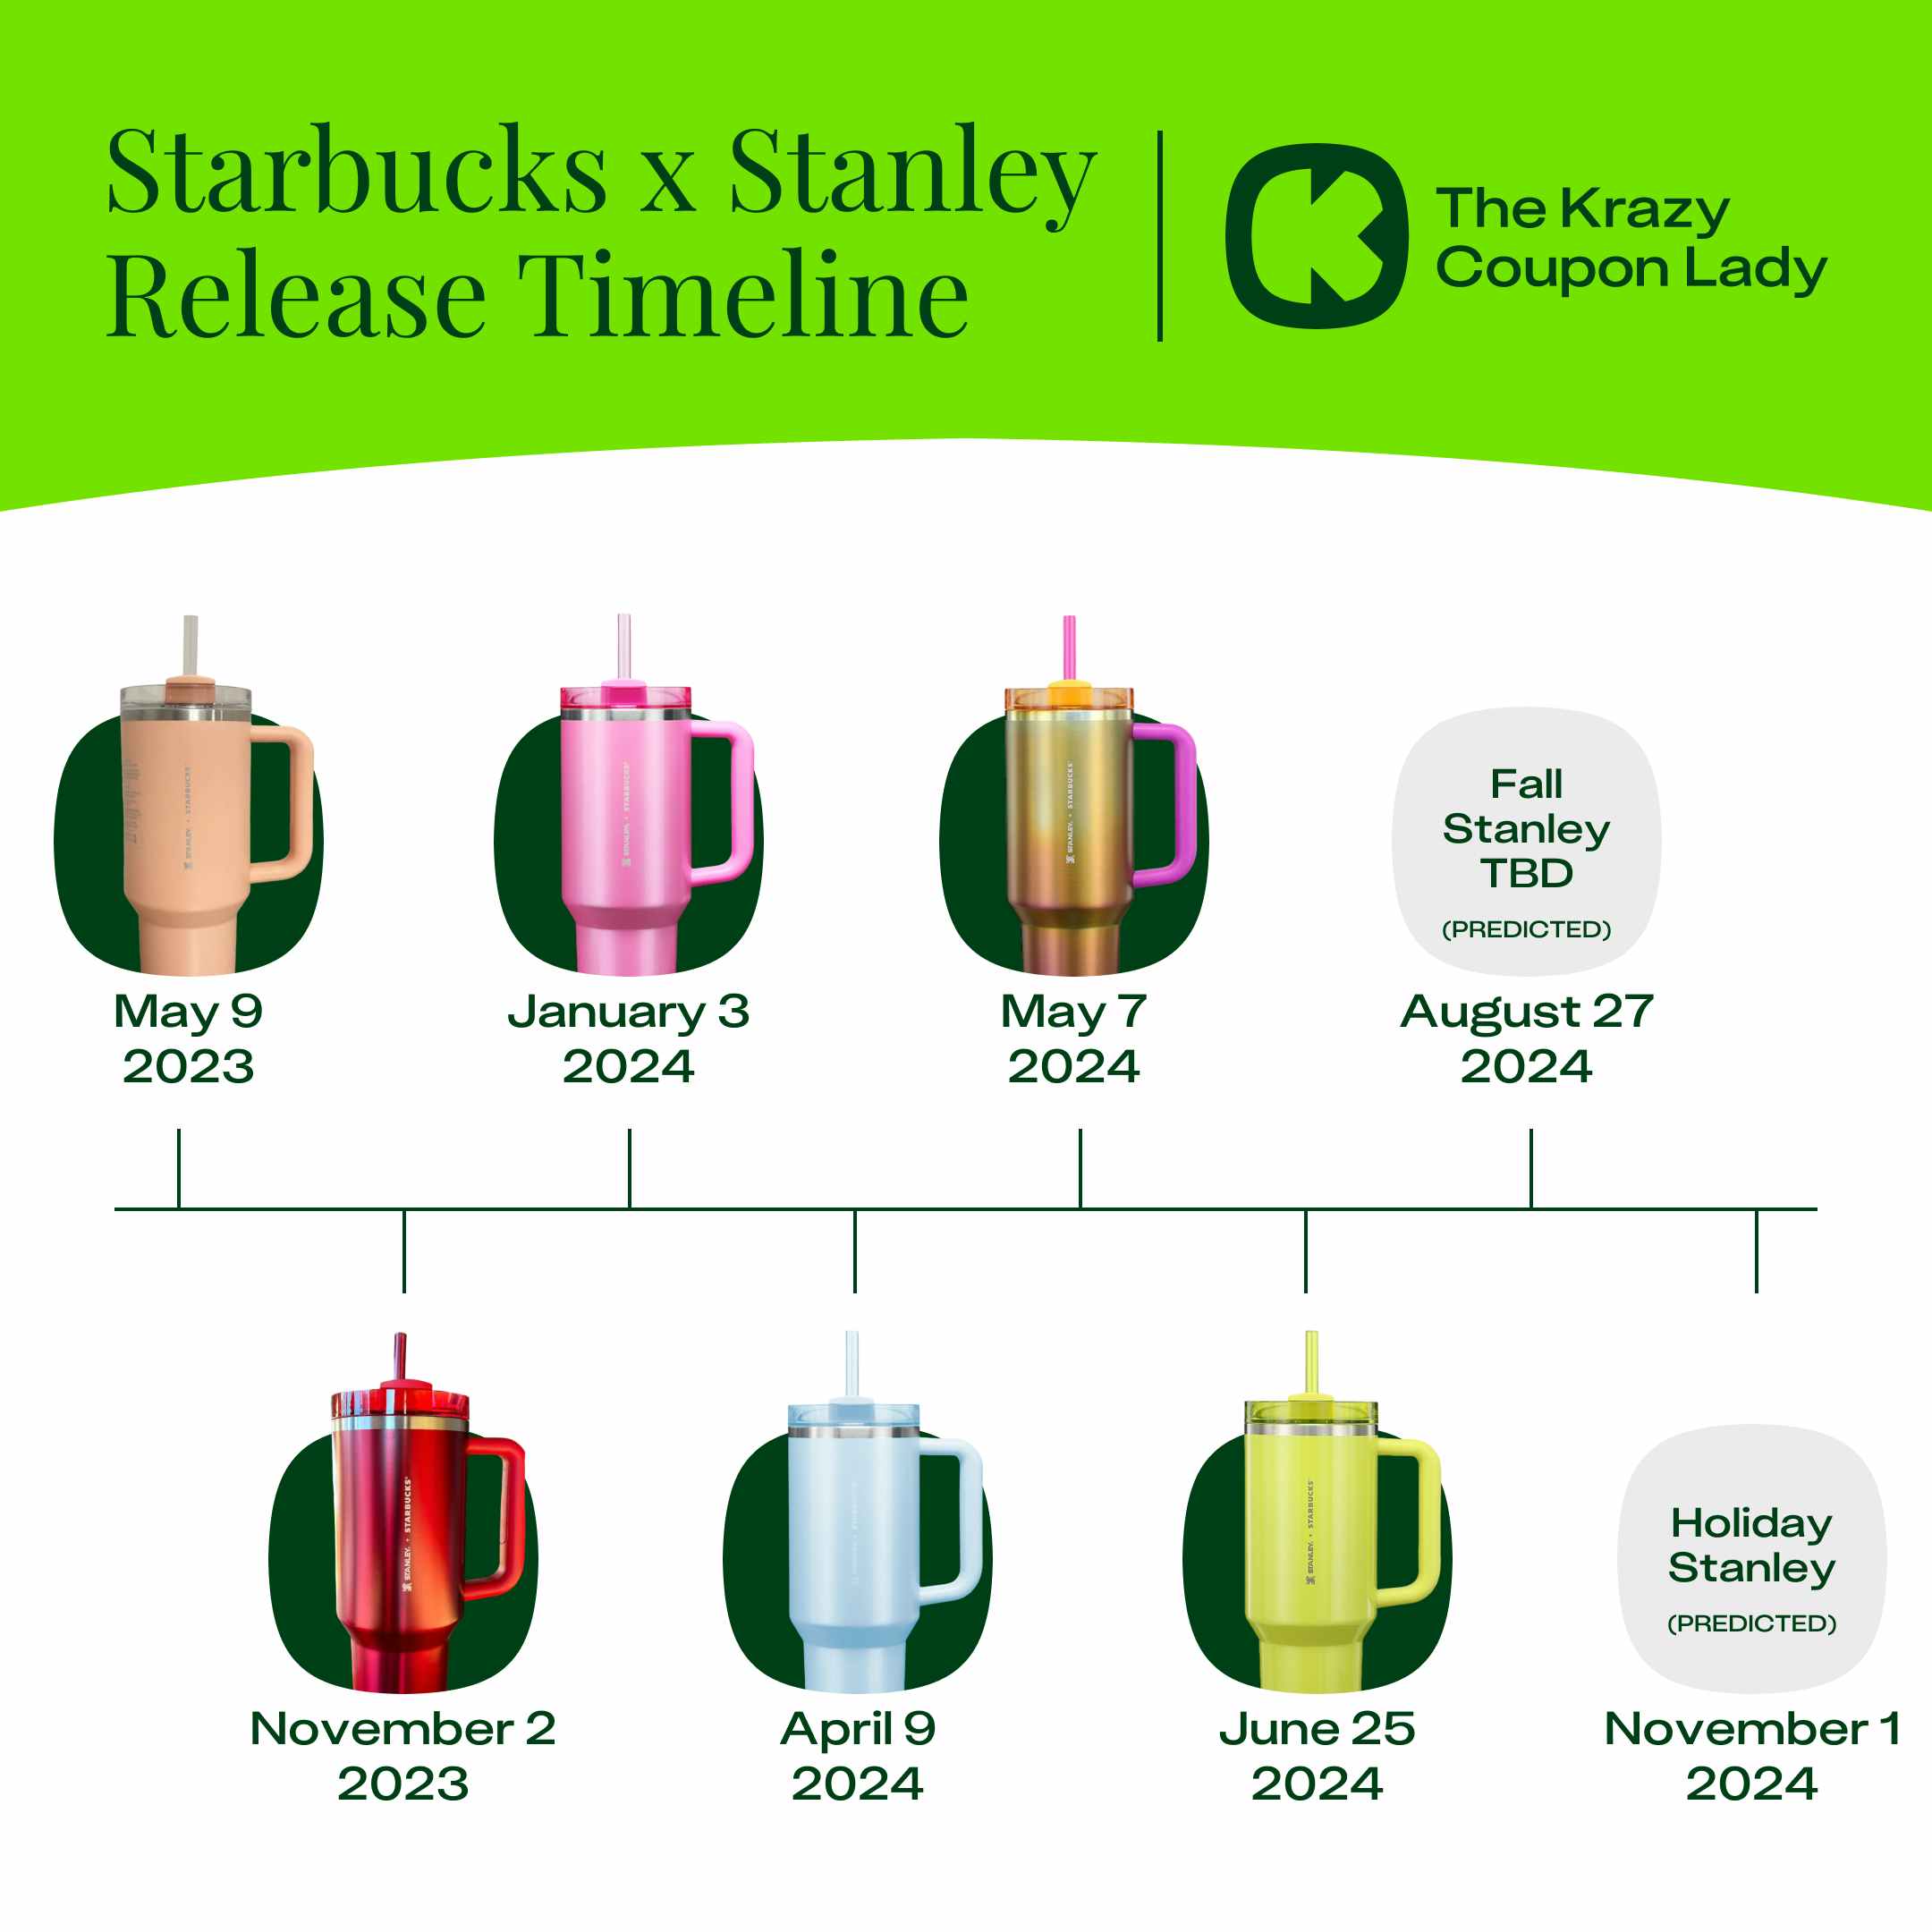 Starbucks x Stanley Release Timeline June 25 2024